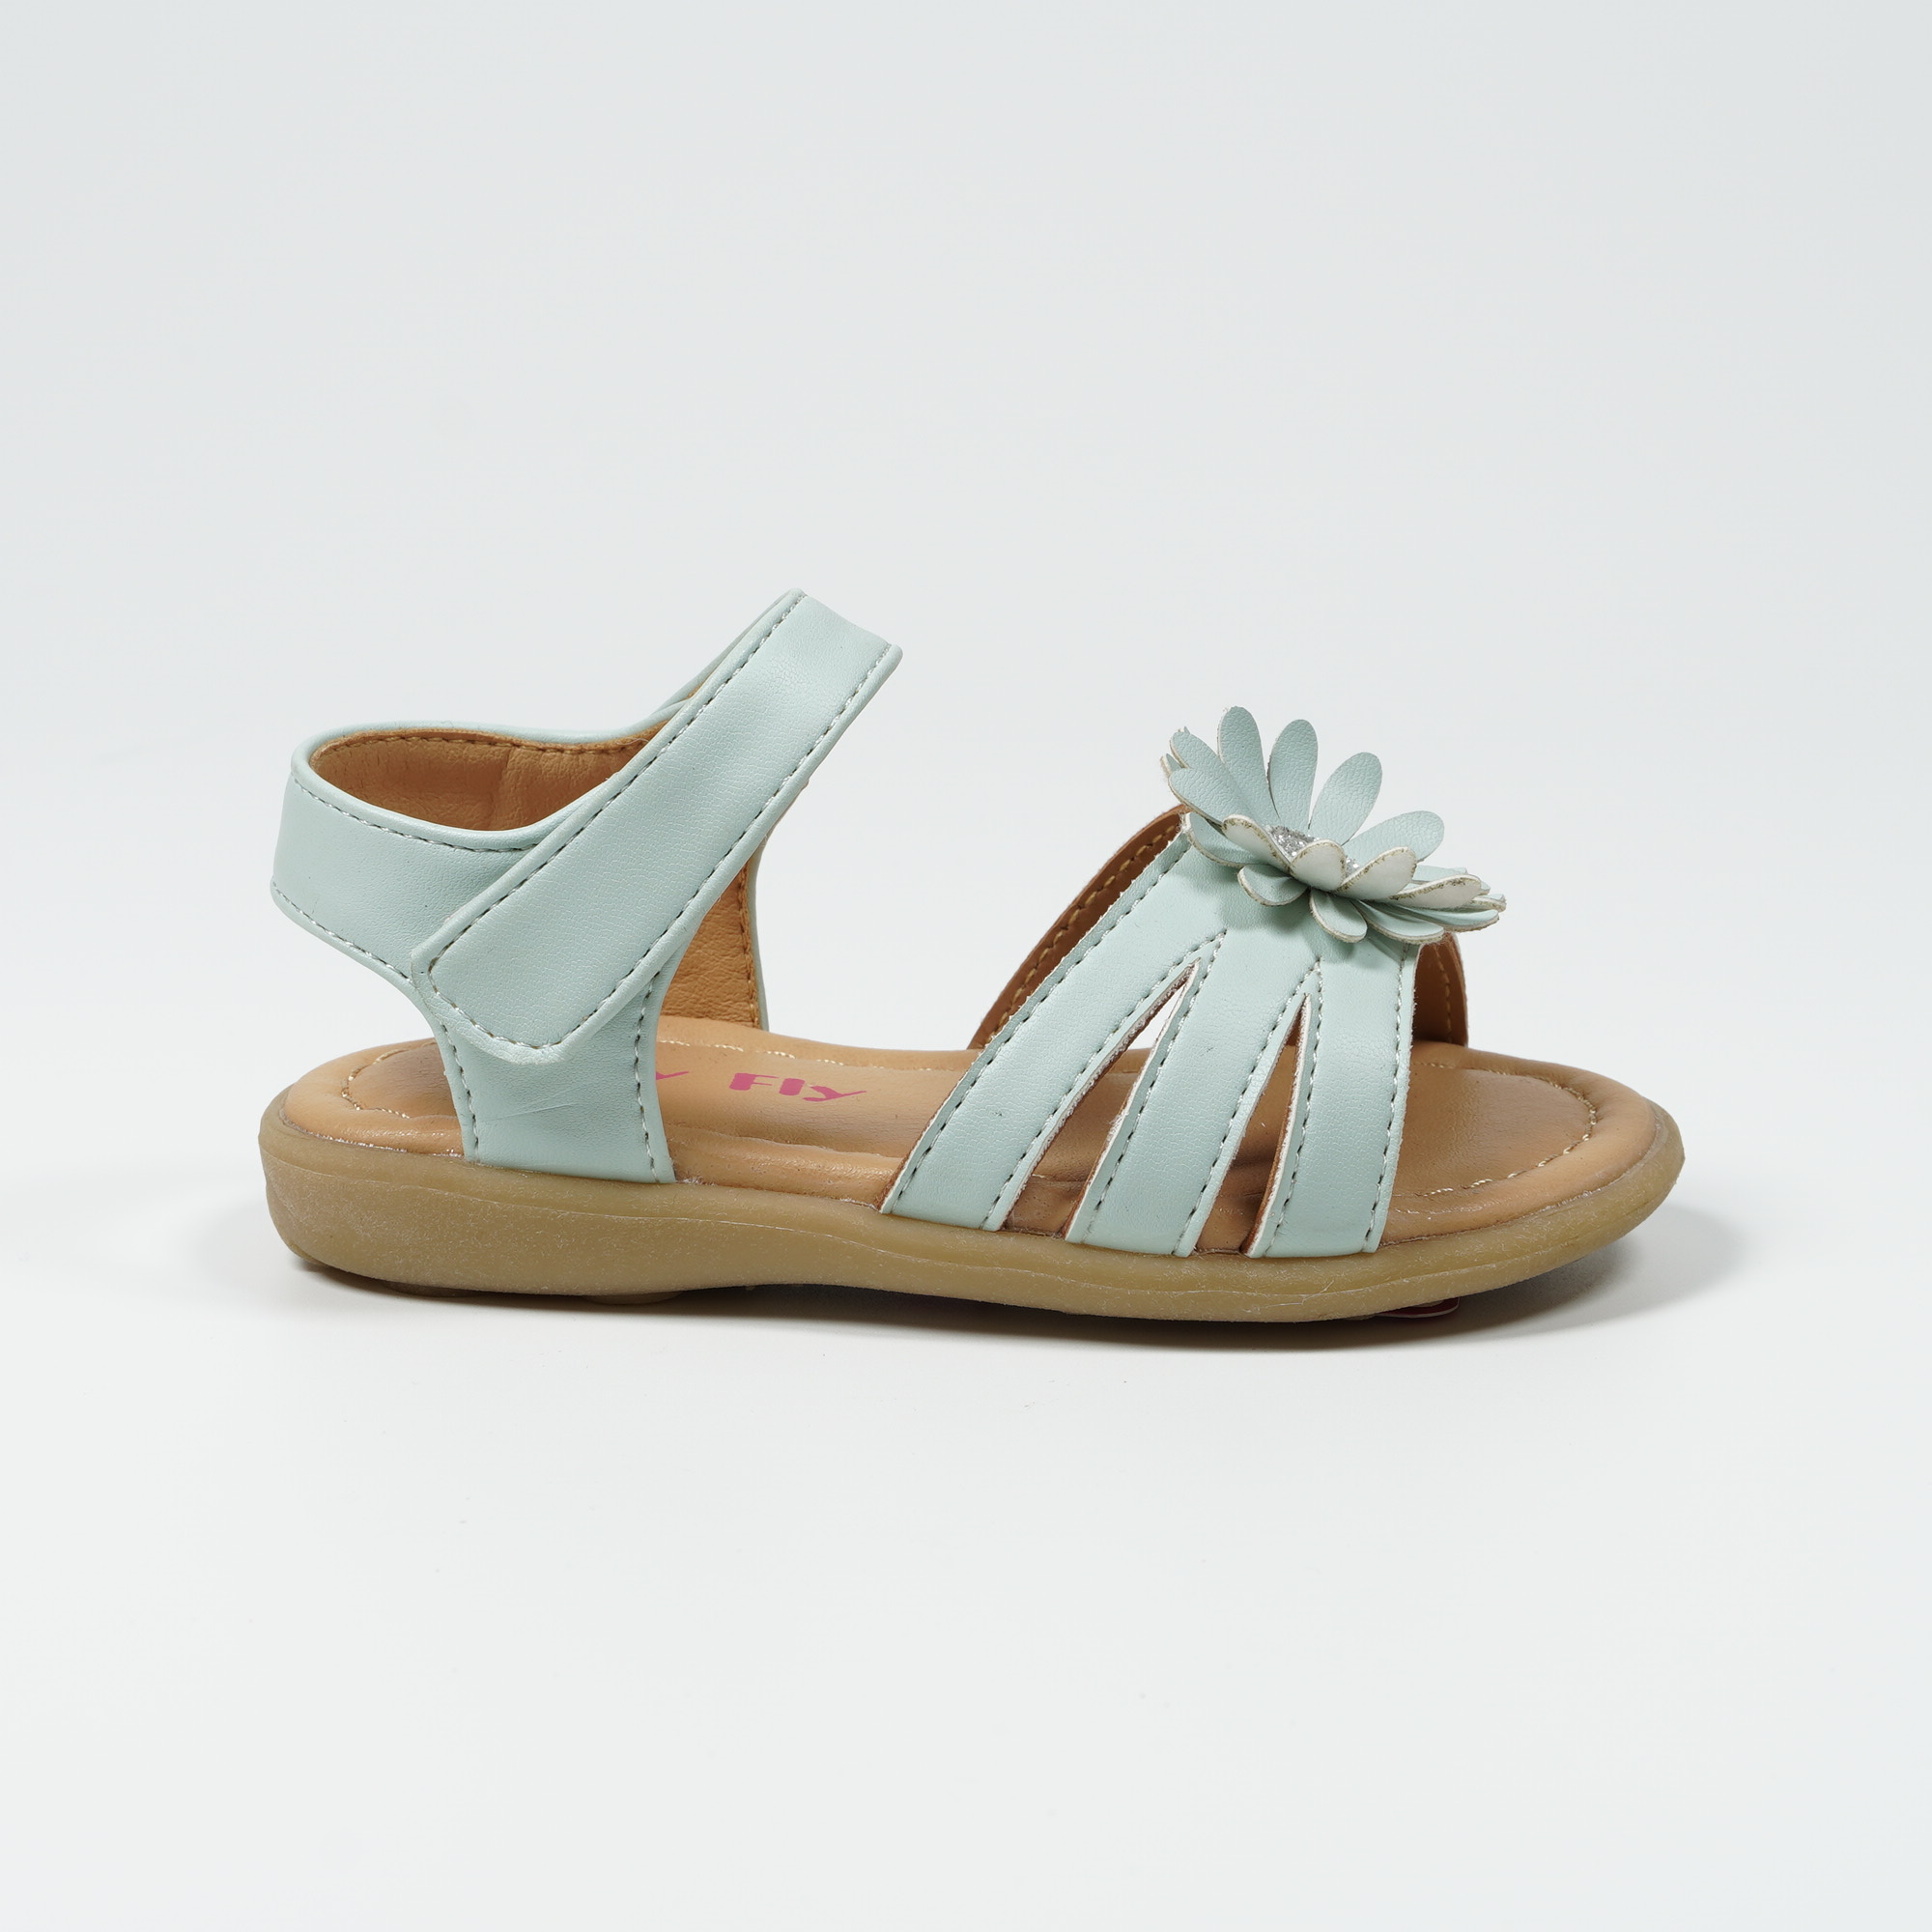 Spring elegant little Daisy sandals Mori Girls Style outdoor sandals